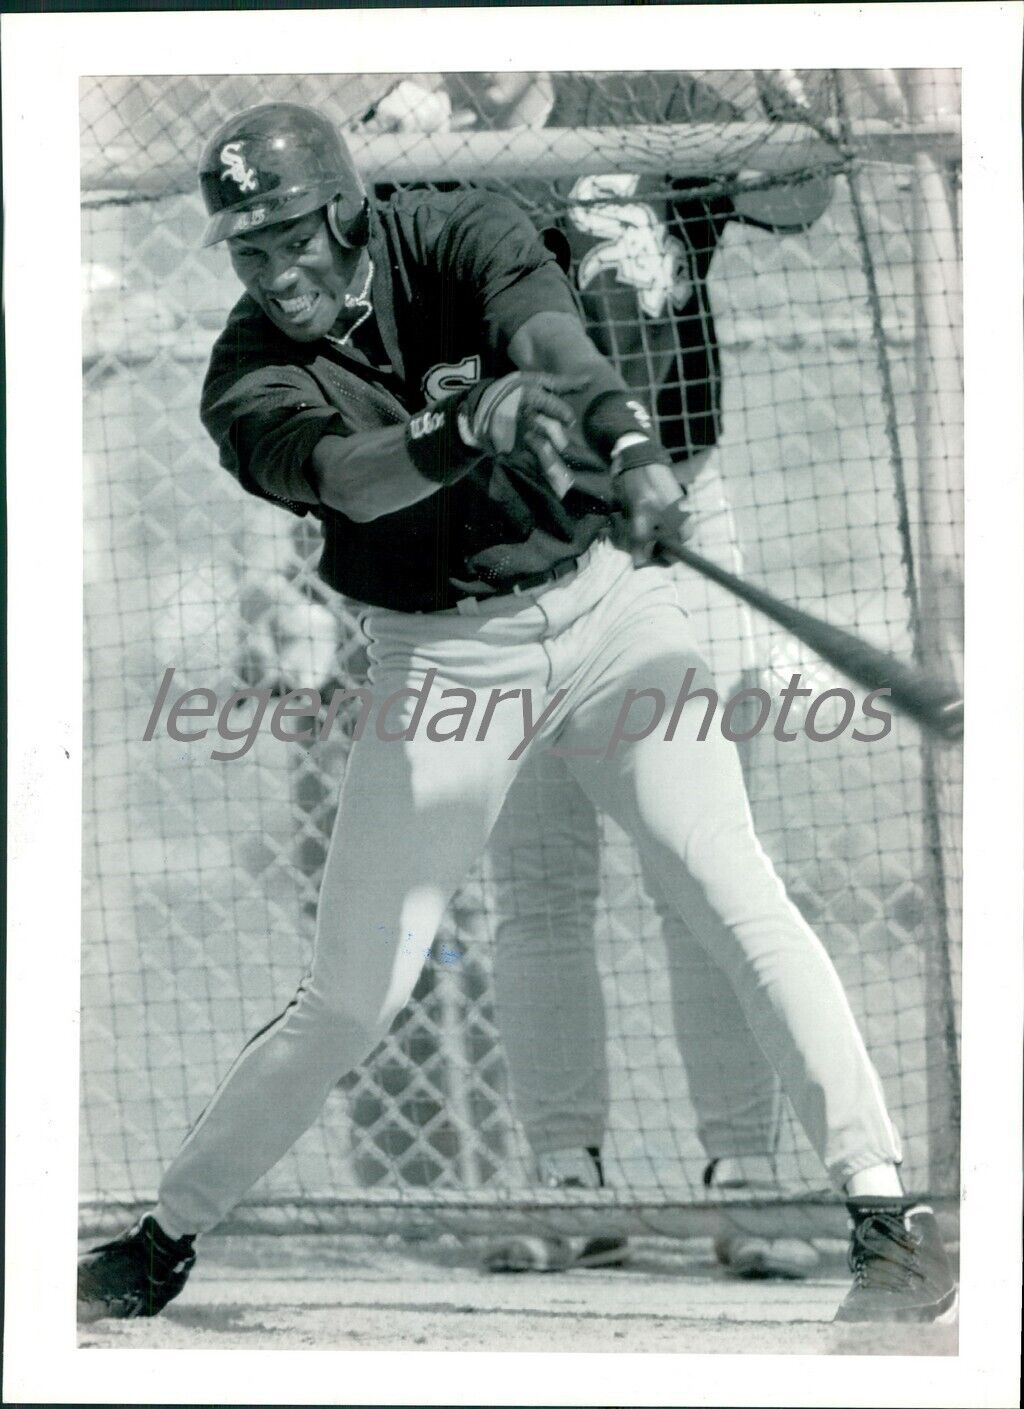 1994 Michael Jordan White Sox Batting Practice Period Digital News Photo